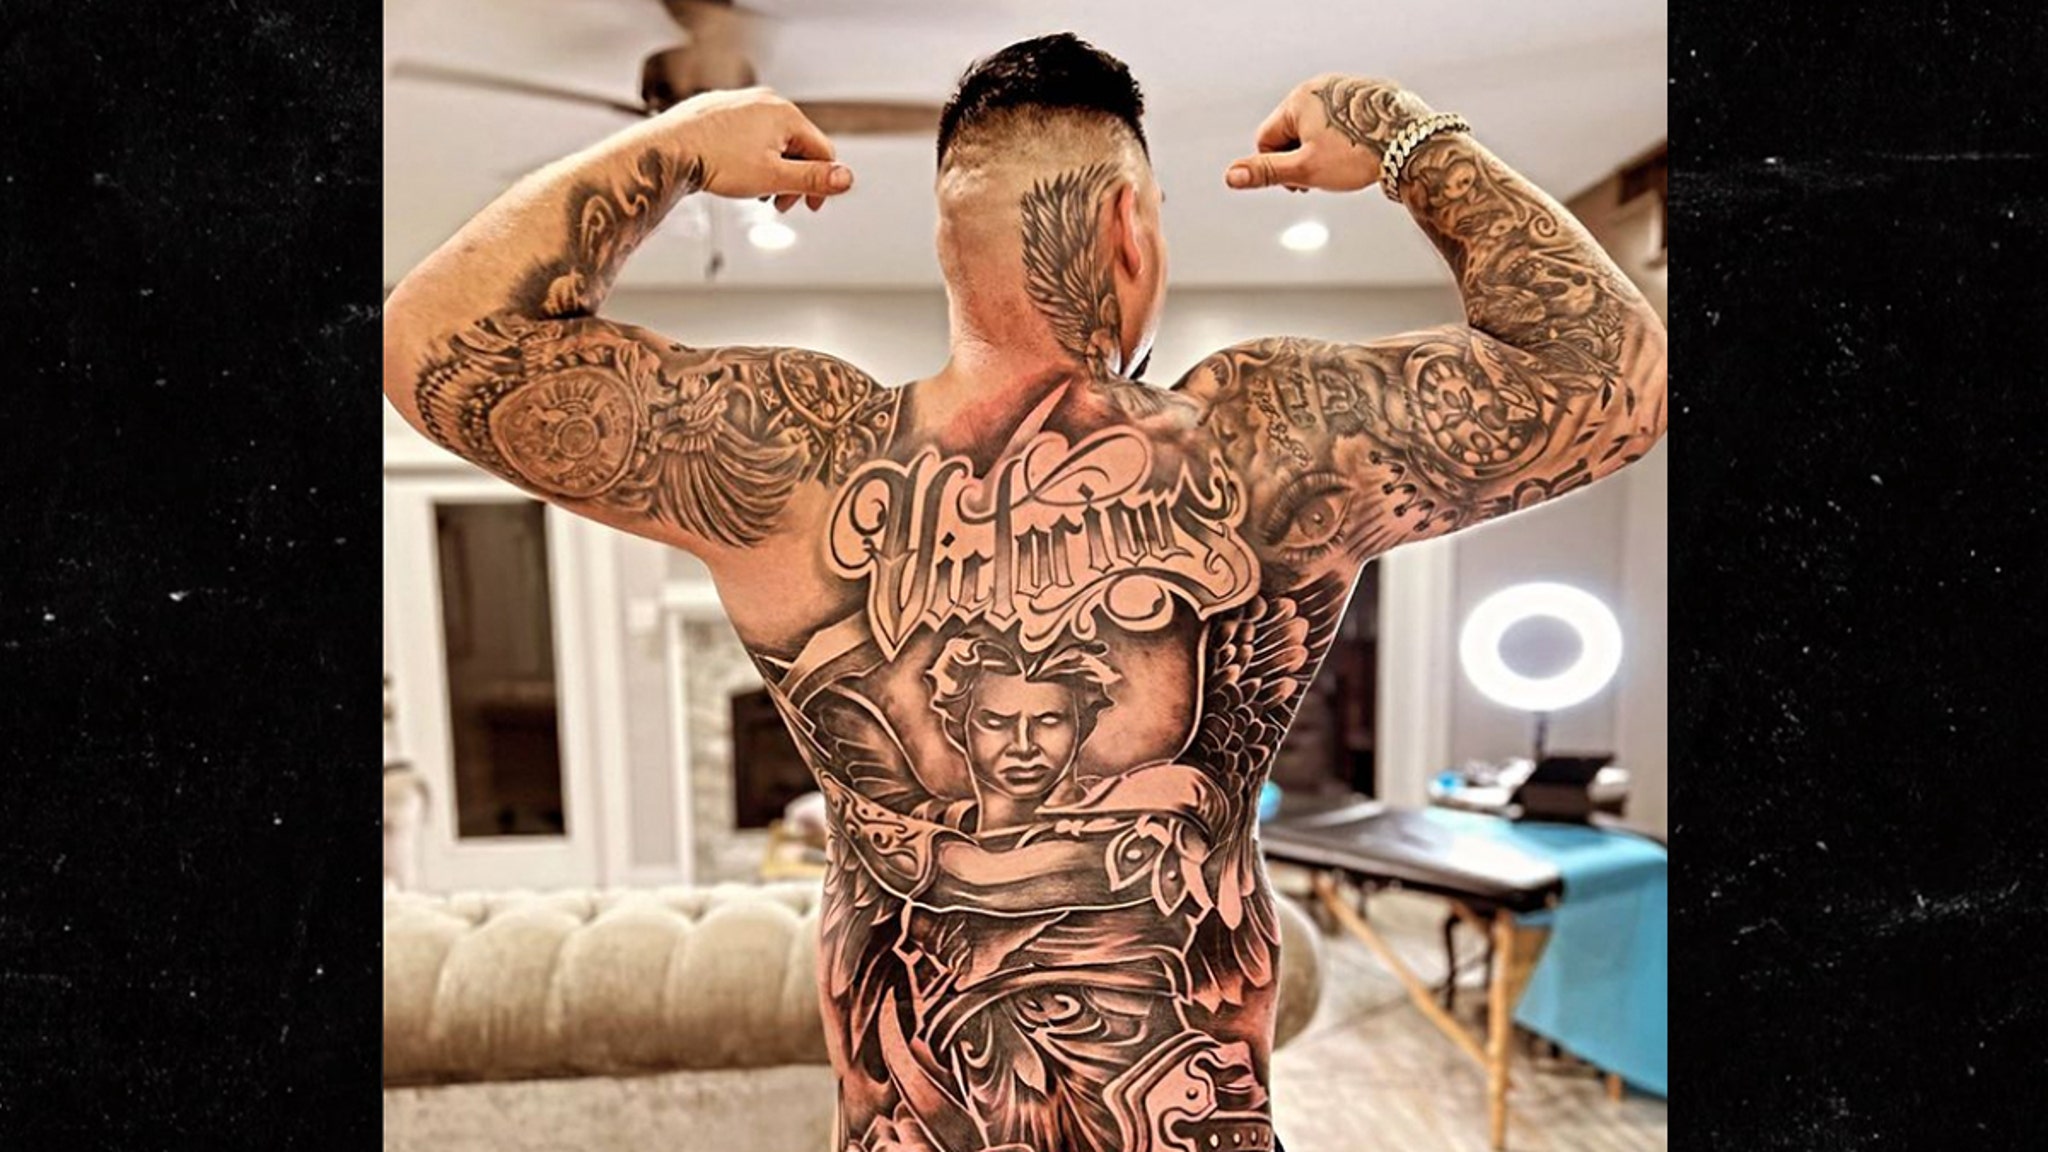 Boxing Star Andy Ruiz Gets Massive Backside Tattoo, Butt Cheeks